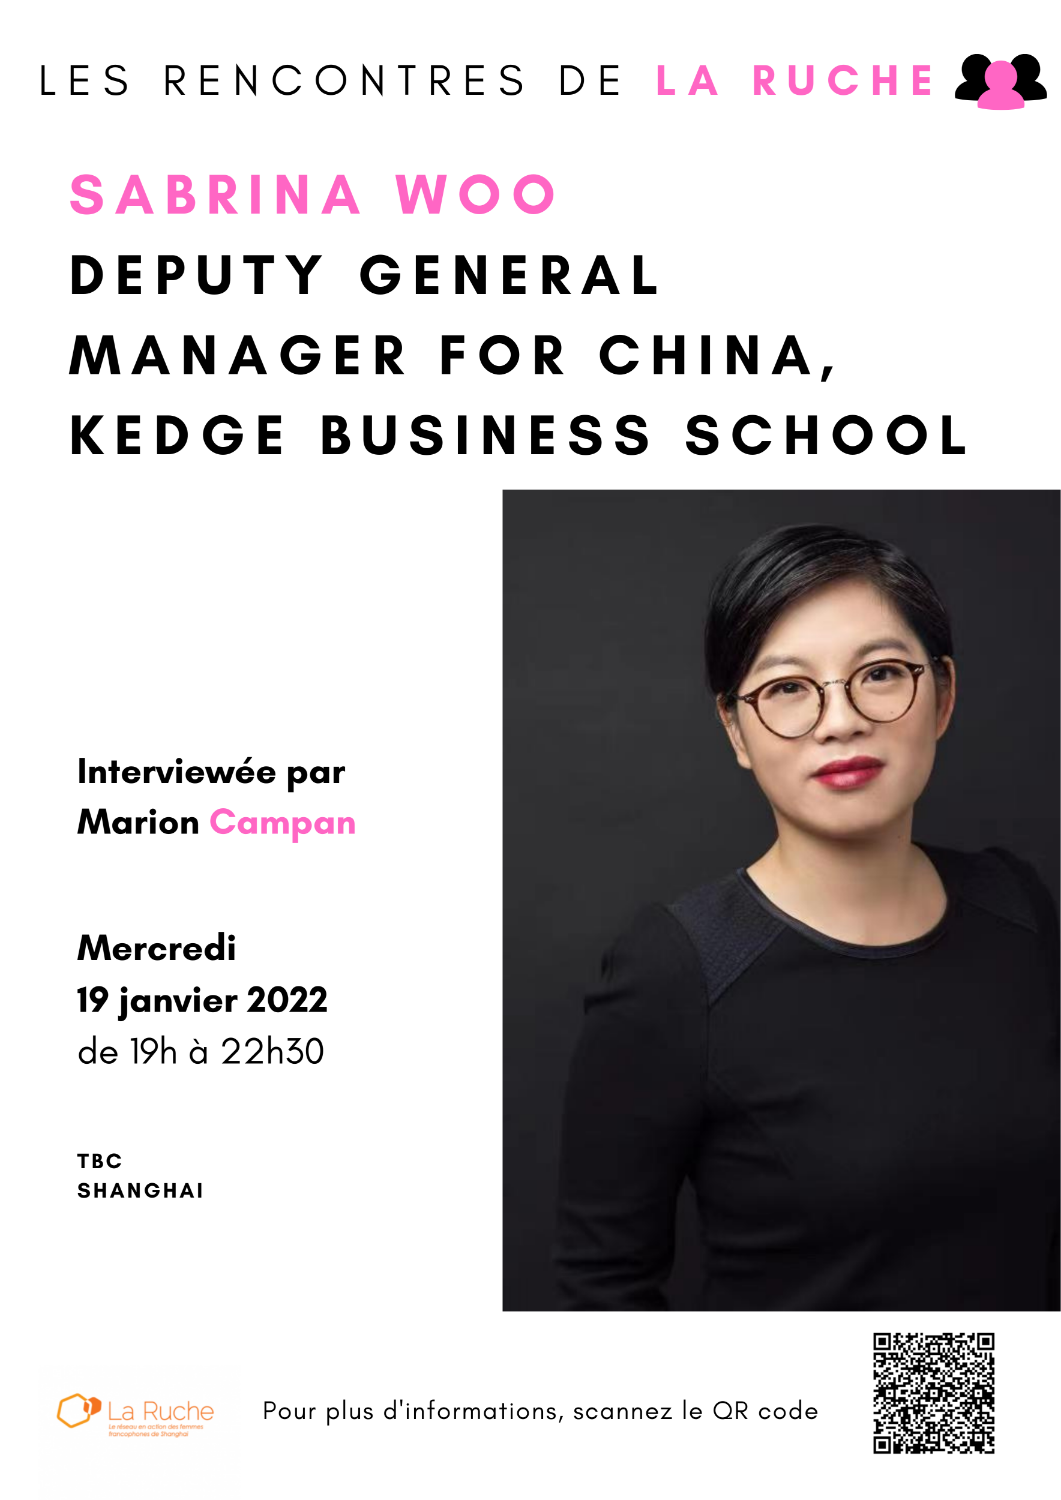 Mercredi 19 Janvier - Rencontre avec Sabrina Woo, Deputy General Manager for China KEDGE Business School